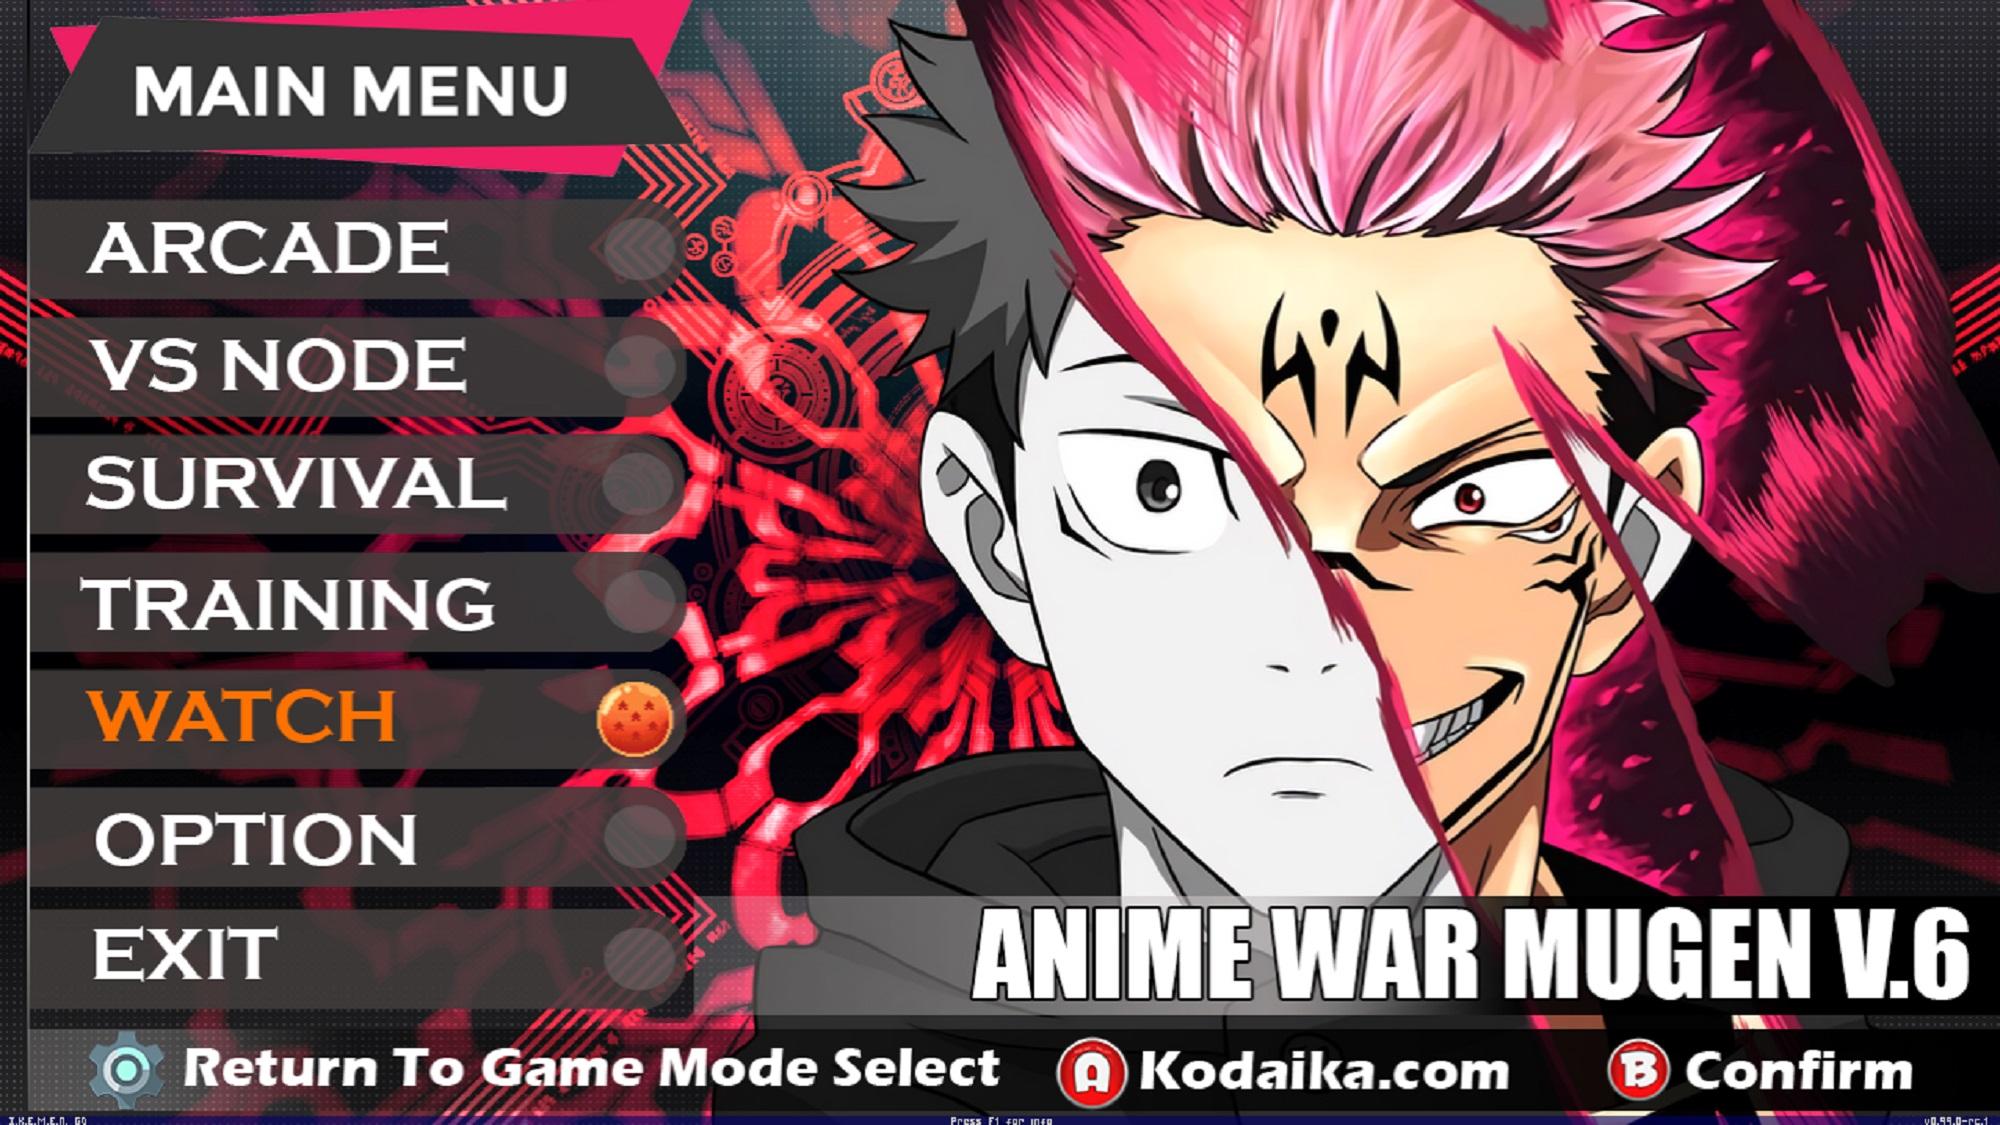 Anime War Super Mugen V.6 – ALL NEW CHARACTER